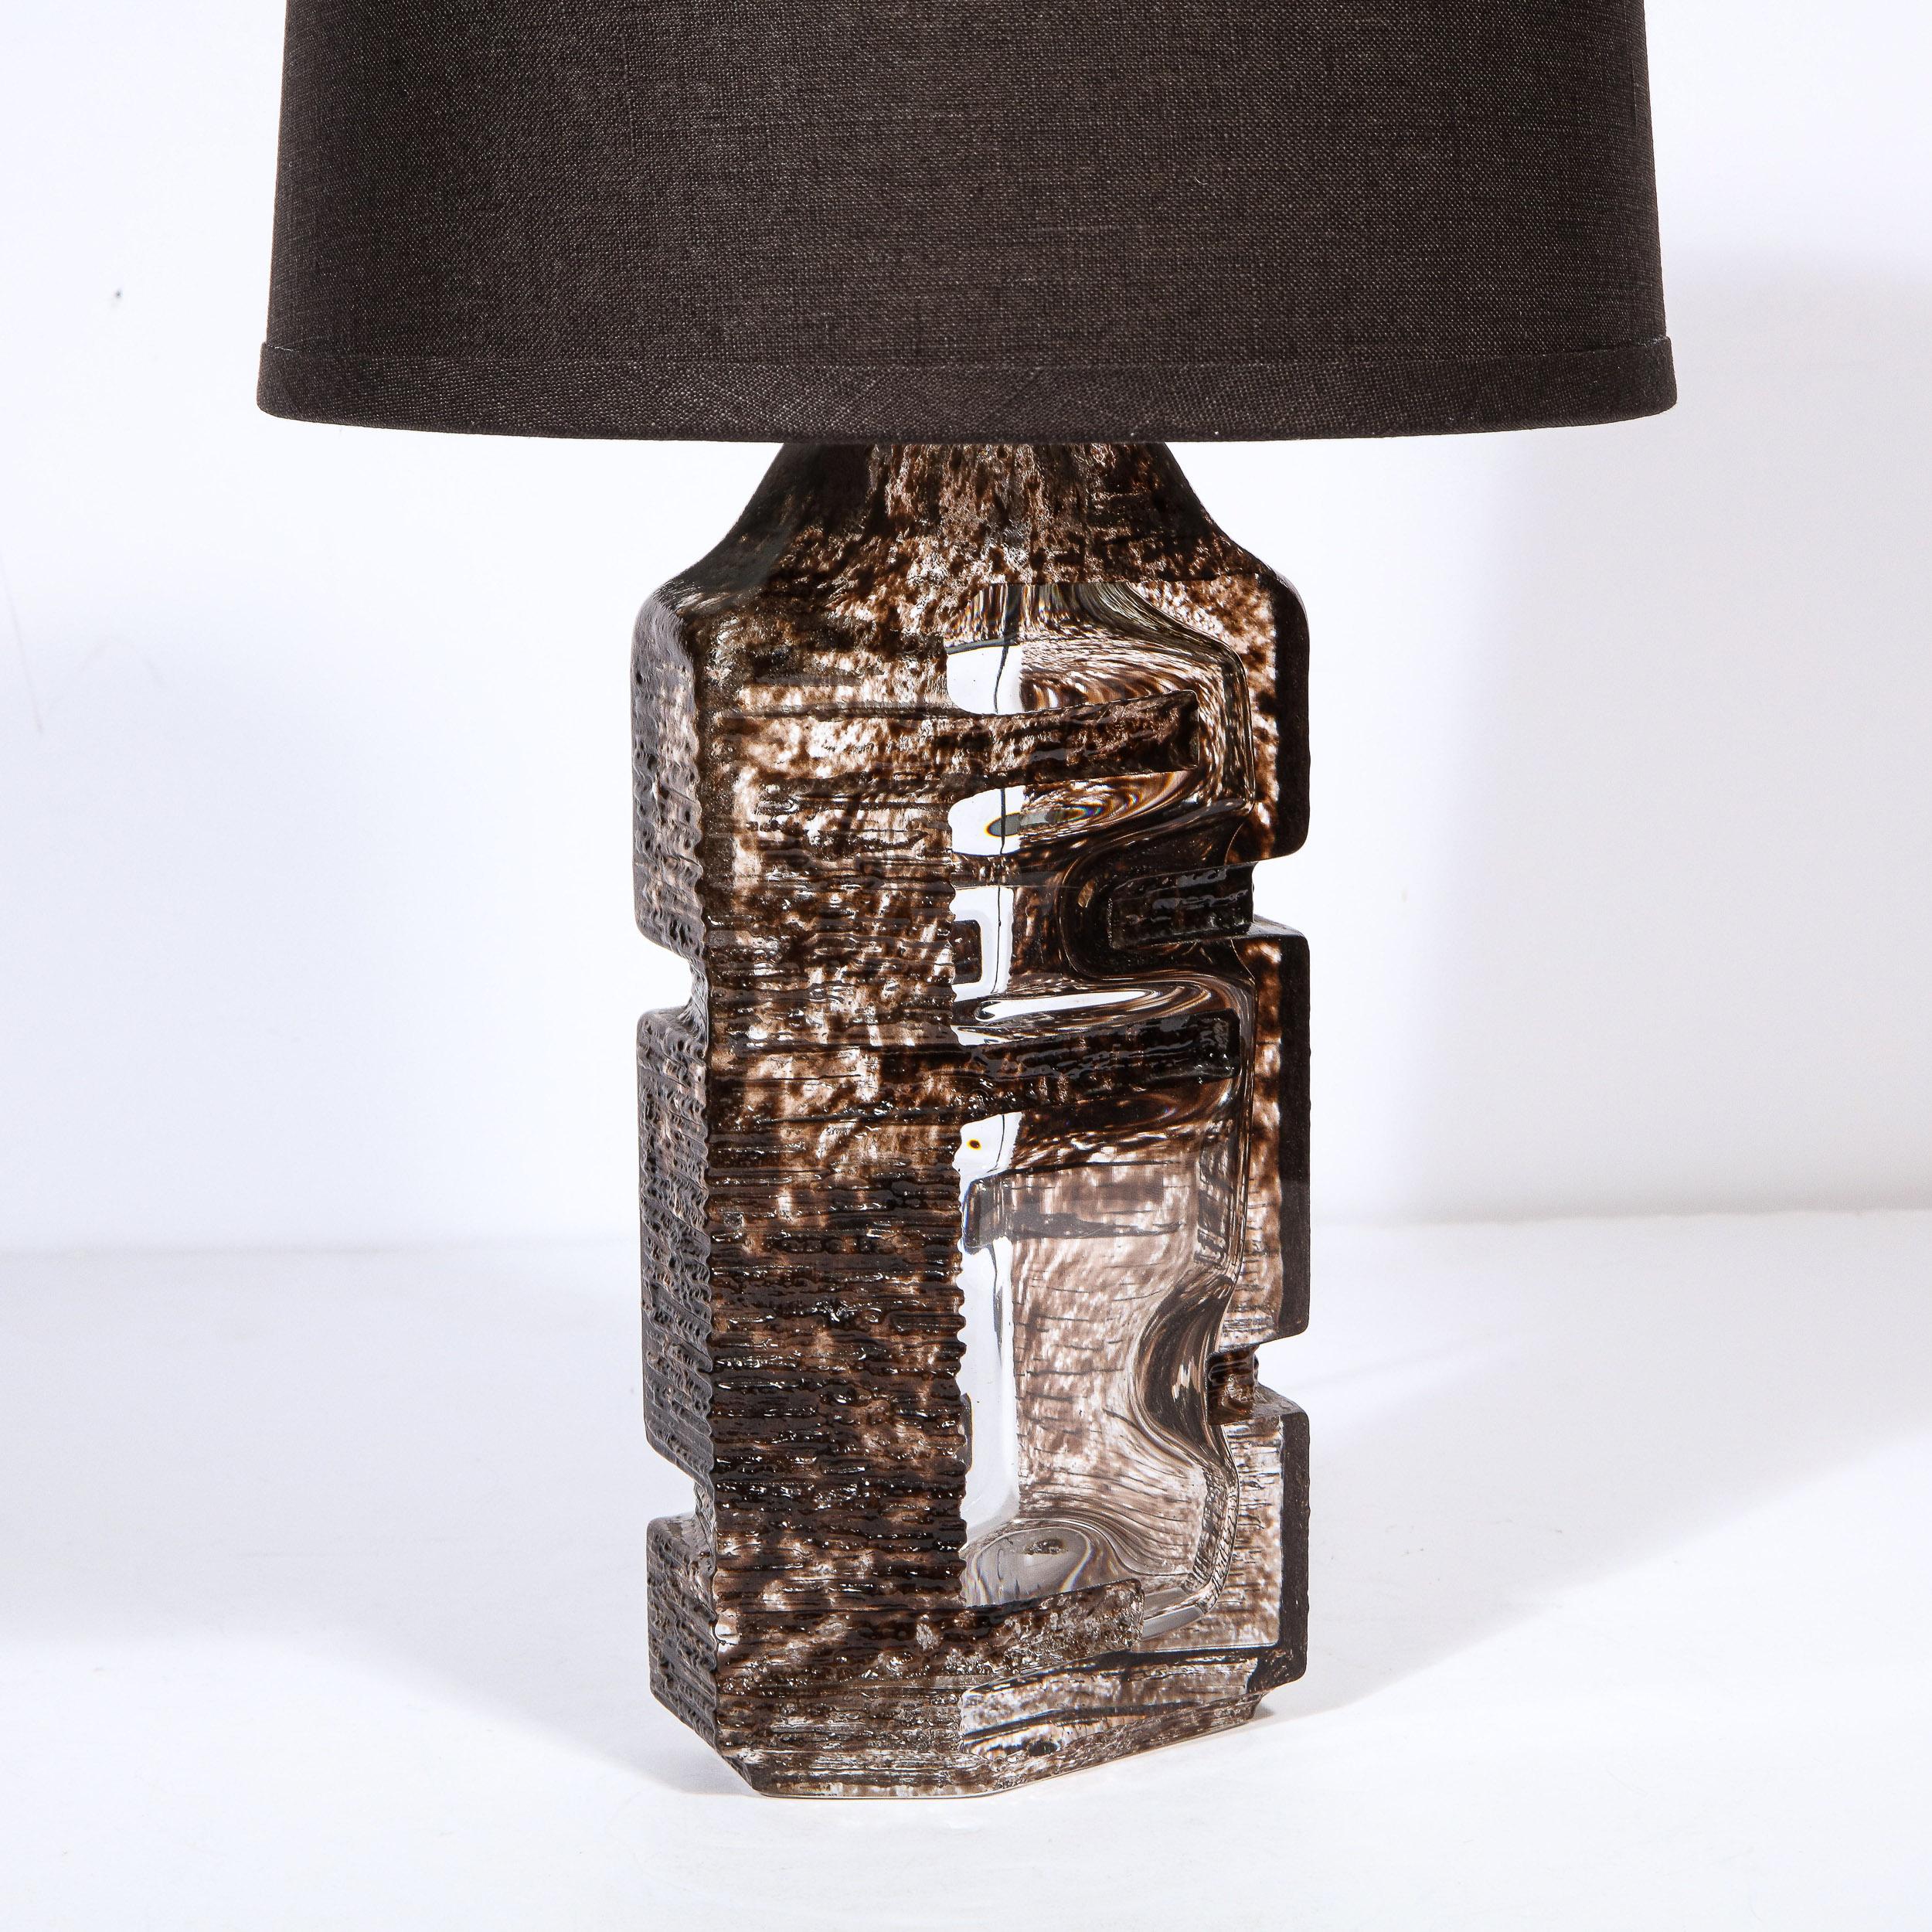 Late 20th Century Mid-Century Modern Brutalist Handblown Glass Table Lamp Signed Daum